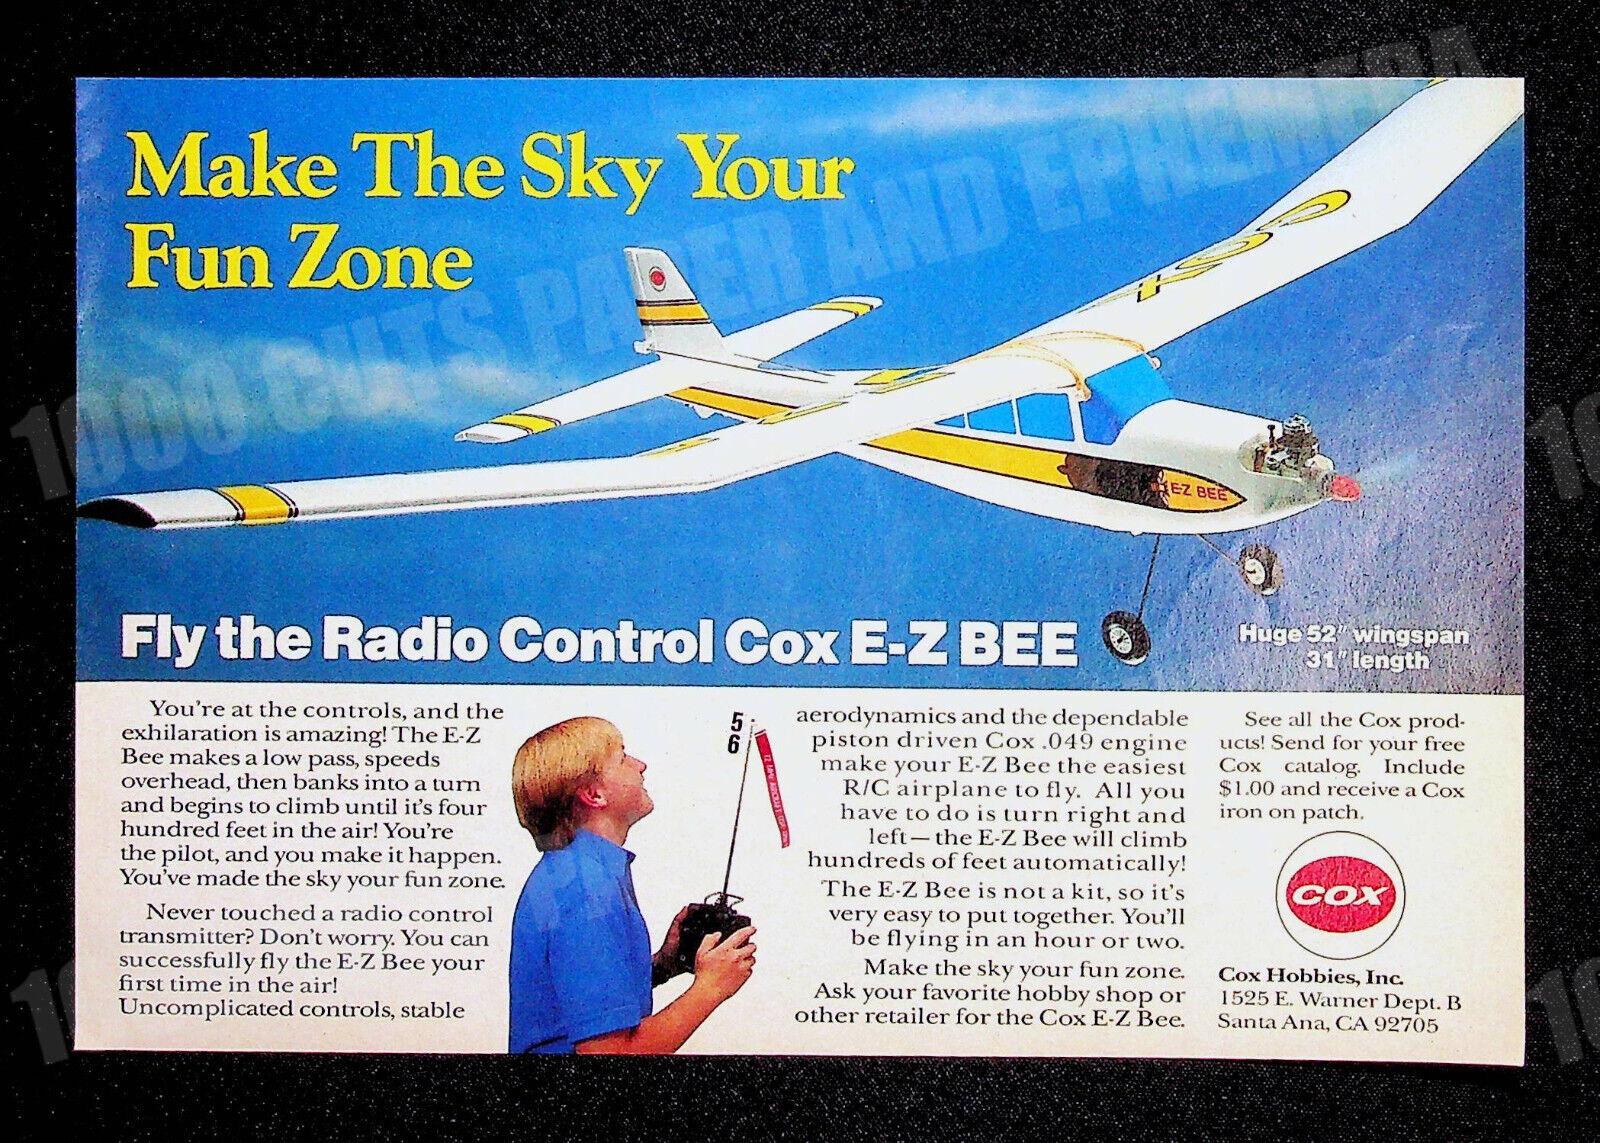 Cox E-Z Bee Radio Controlled Airplane 1989 Trade Print Magazine Ad Poster ADVERT